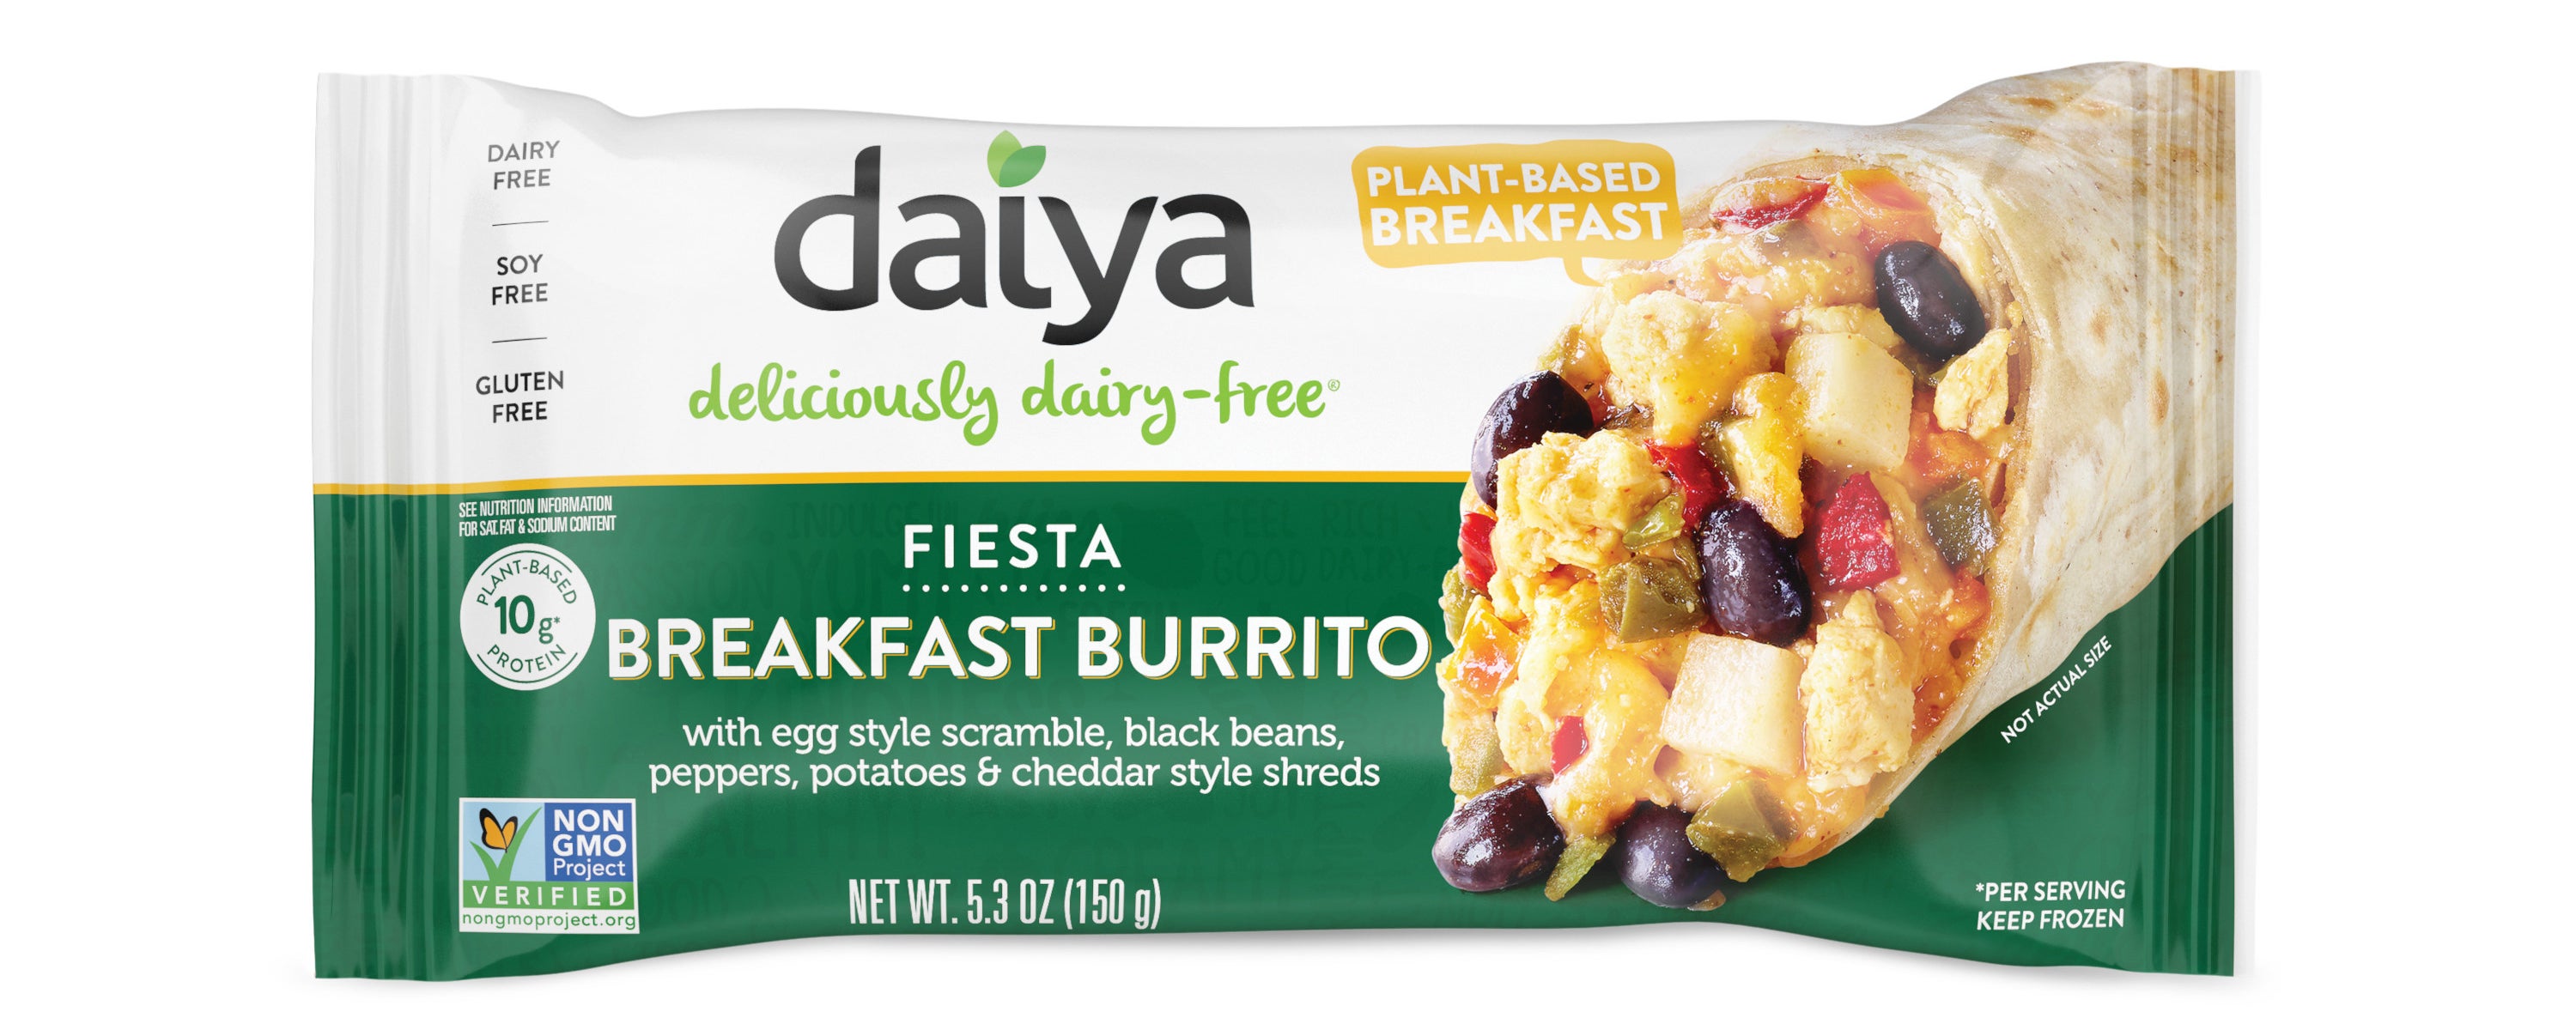 daiya fiesta-style breakfast burrito 